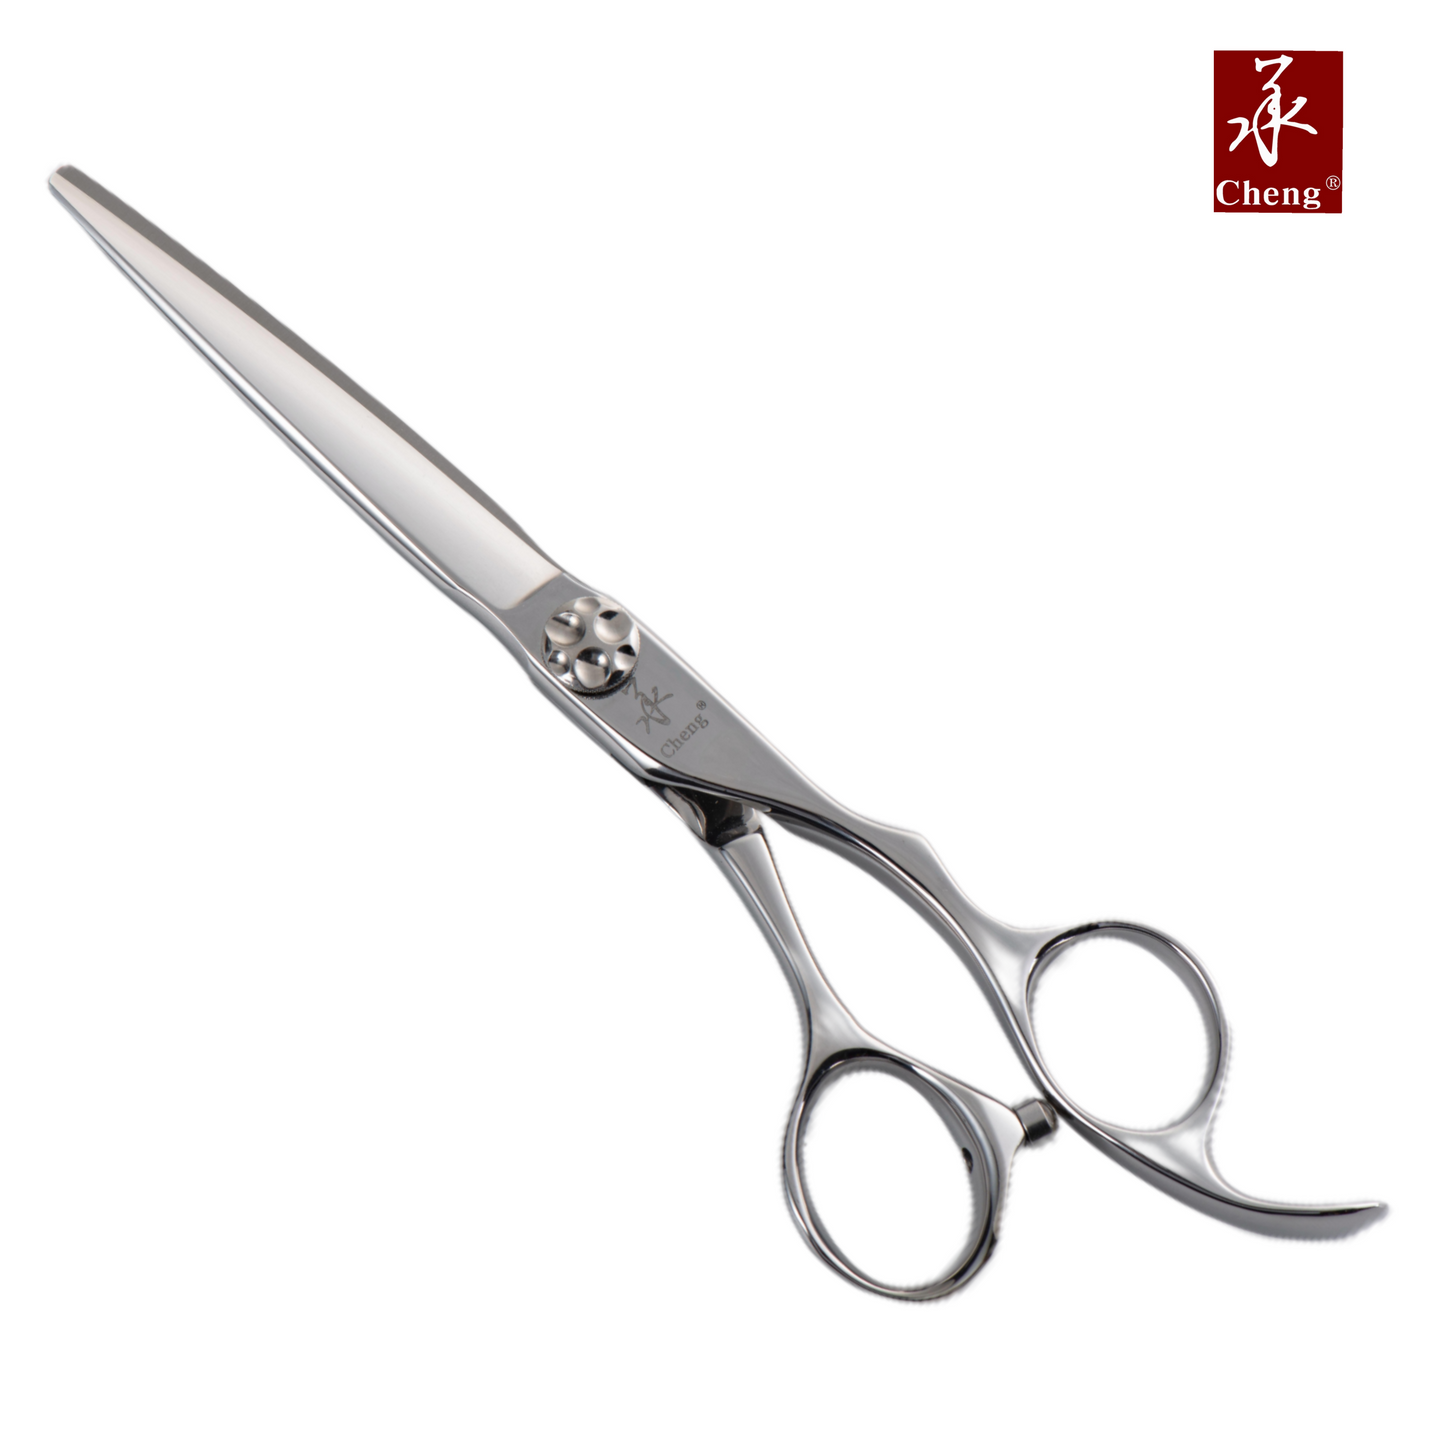 JA-60N Hair Cutting Scissors Professional Salon Barber Shear